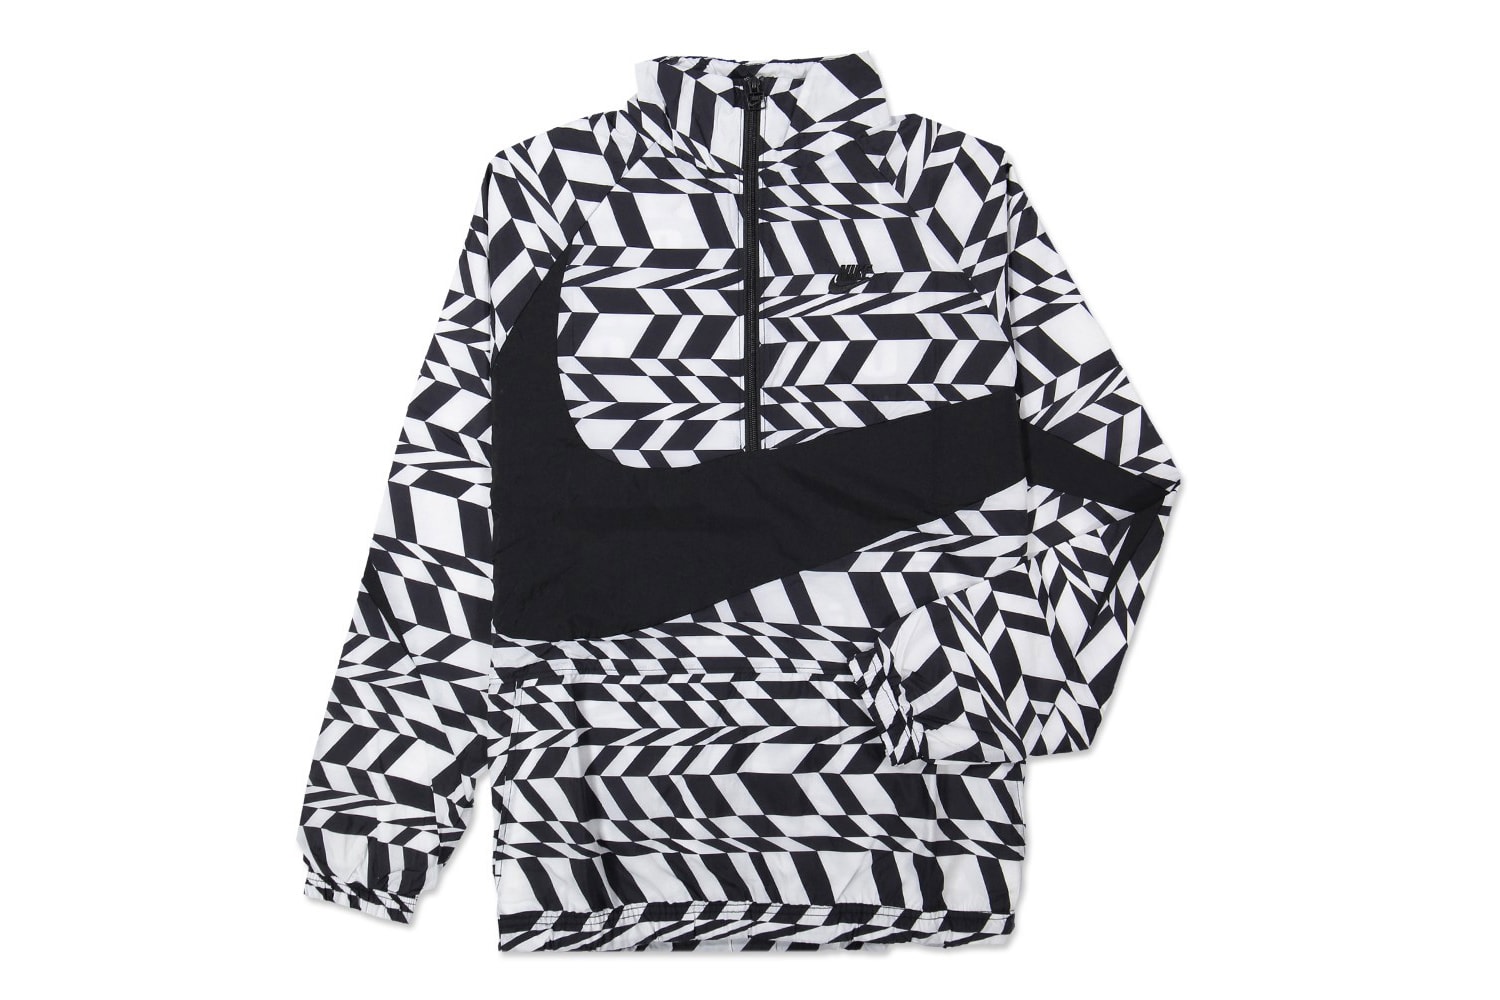 Nike Sportswear Swoosh Woven Camo Pack NSW Track Pants Shorts Jackets Green Beige White Black Patterns Designs